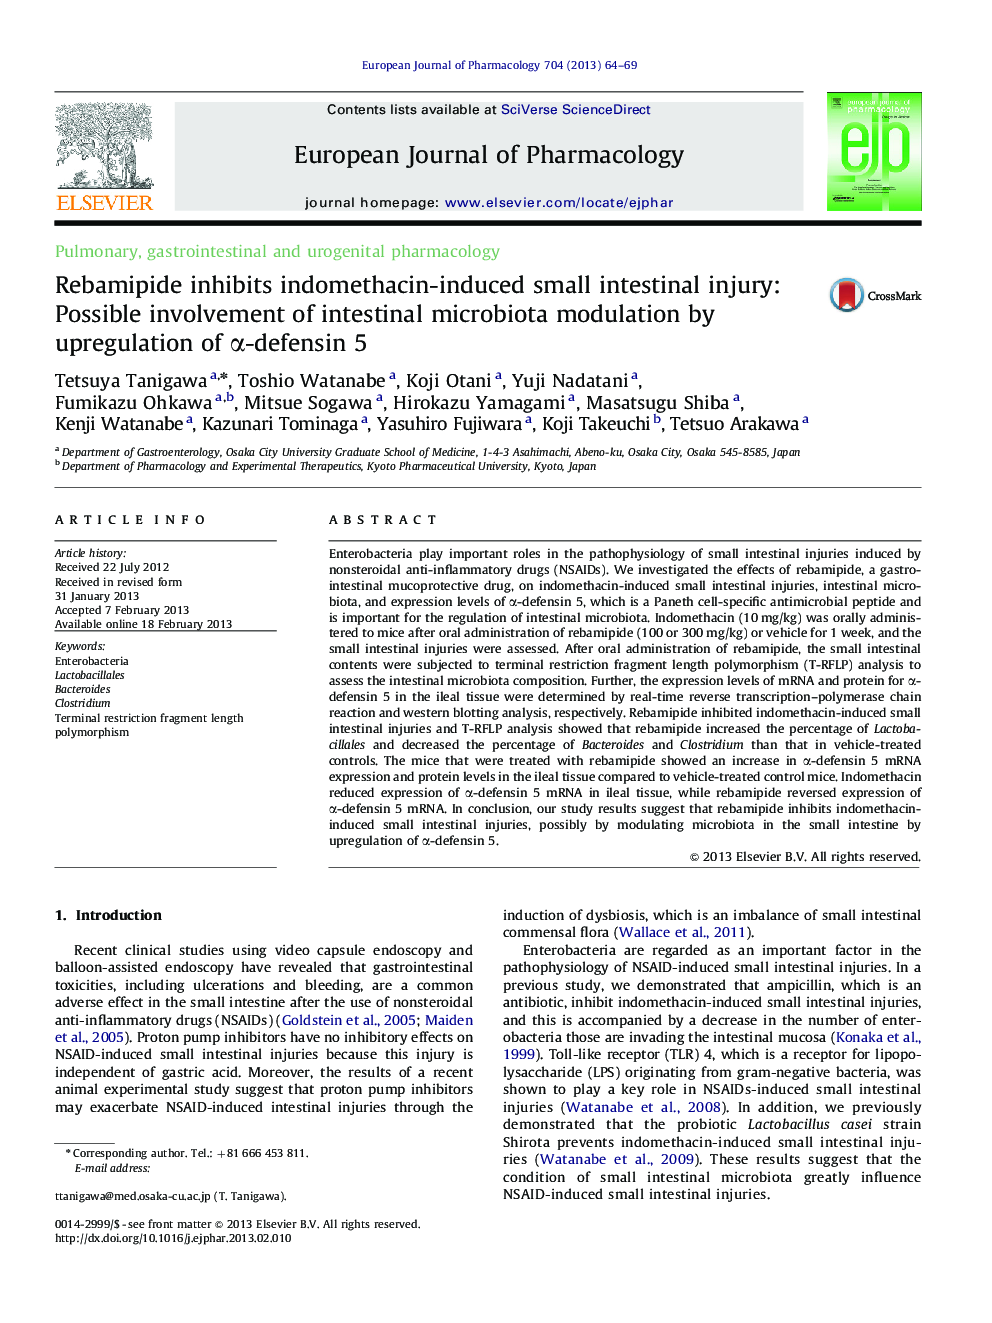 Rebamipide inhibits indomethacin-induced small intestinal injury: Possible involvement of intestinal microbiota modulation by upregulation of α-defensin 5